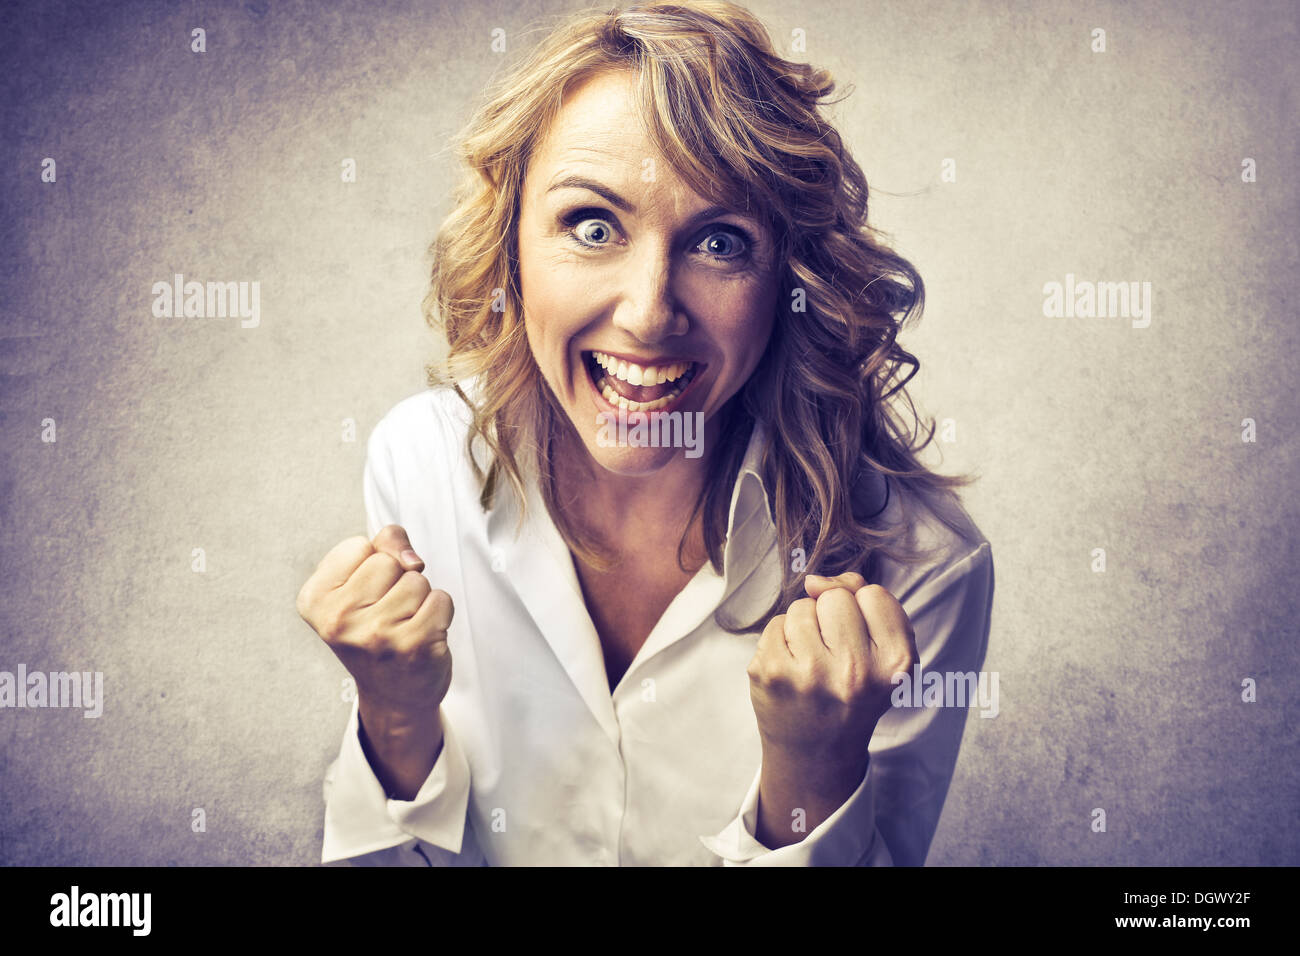 Blonde woman rejoicing Stock Photo